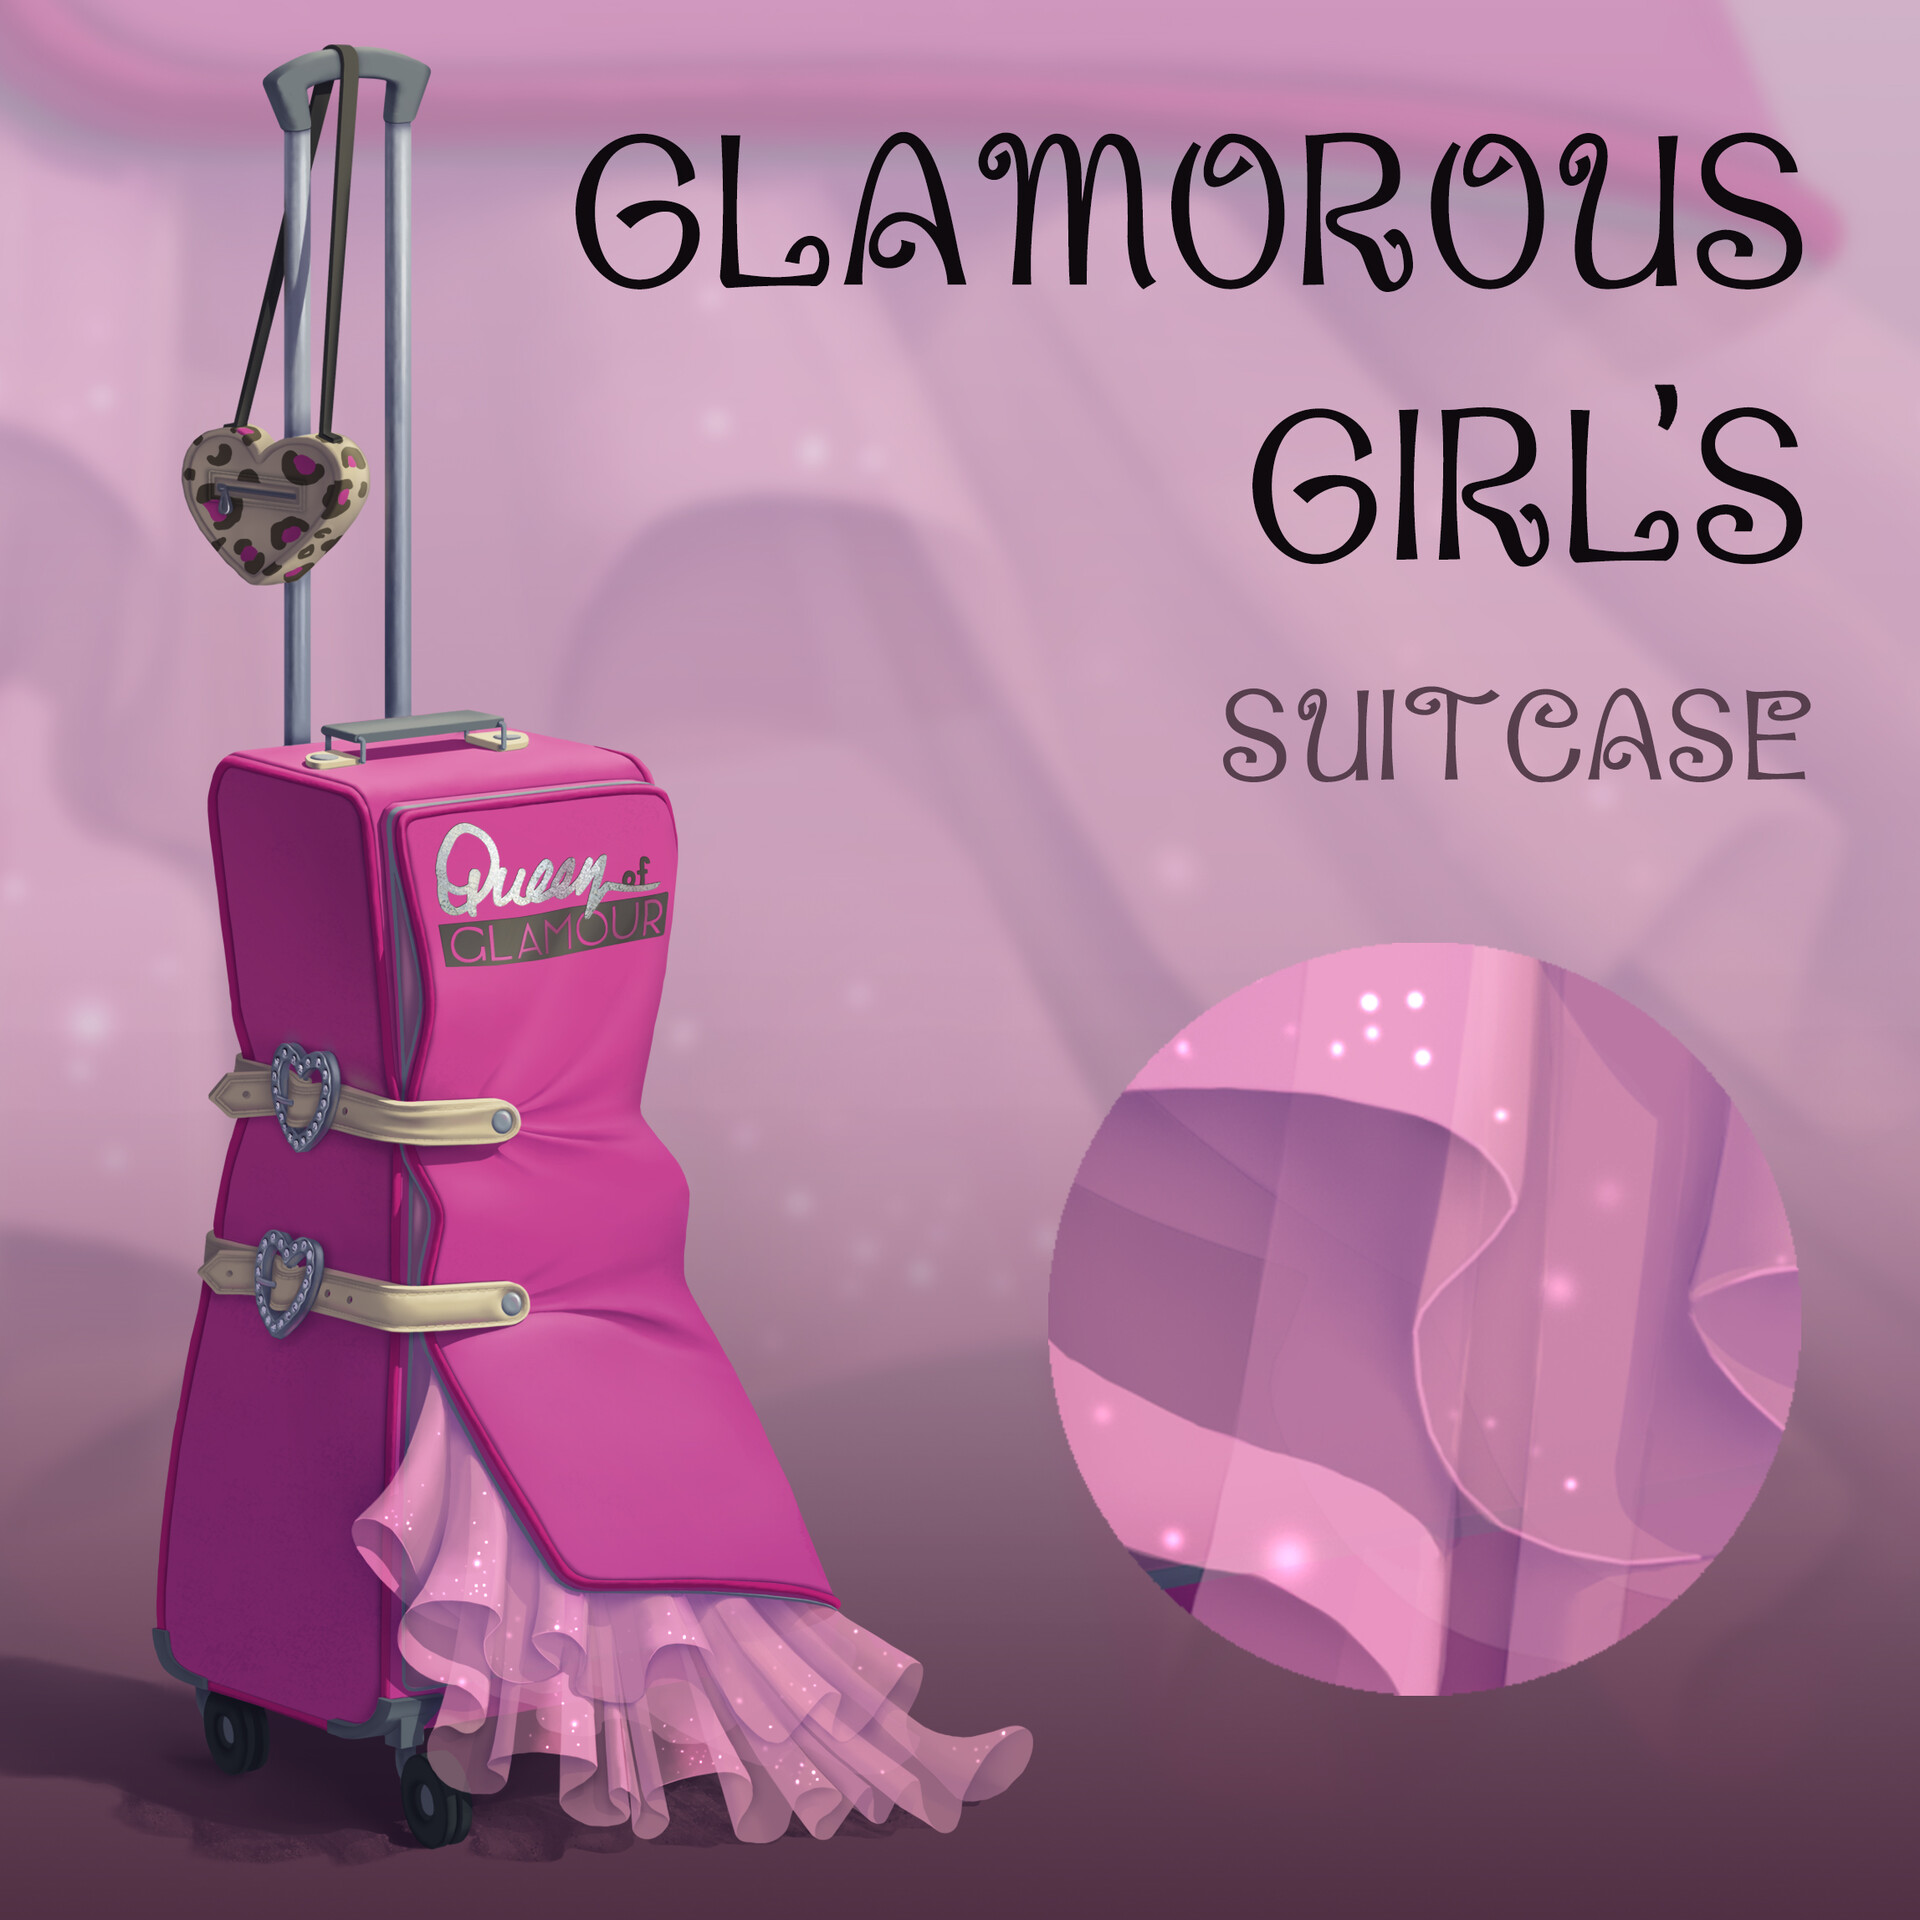 ArtStation - Glamorous girl's suitcase